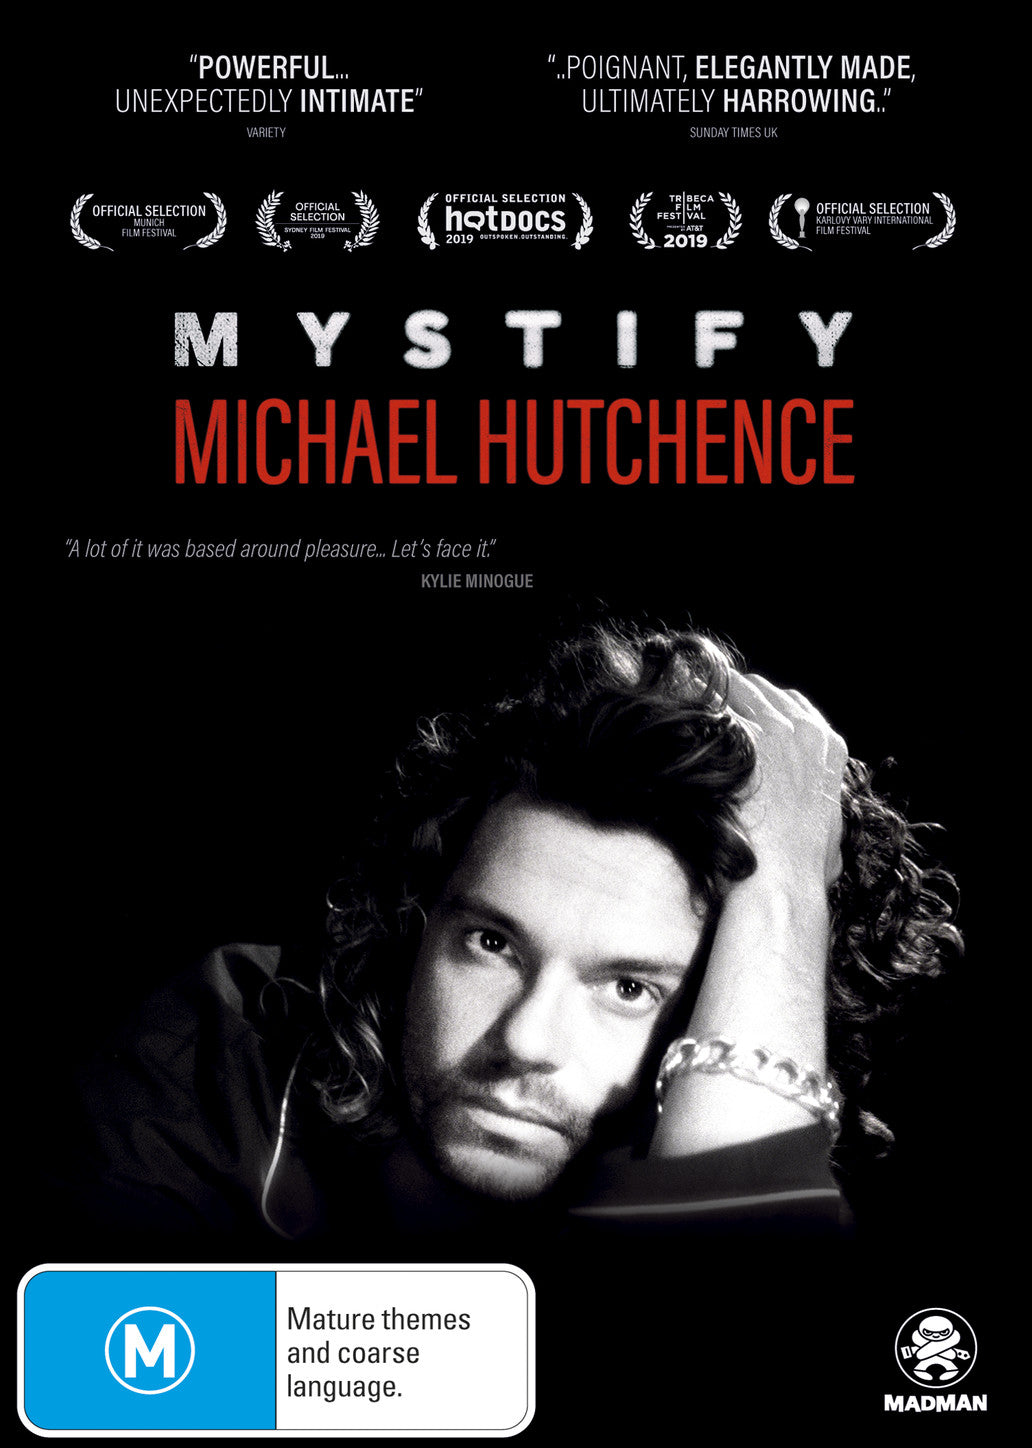 MYSTIFY MICHAEL HUTCHENCE